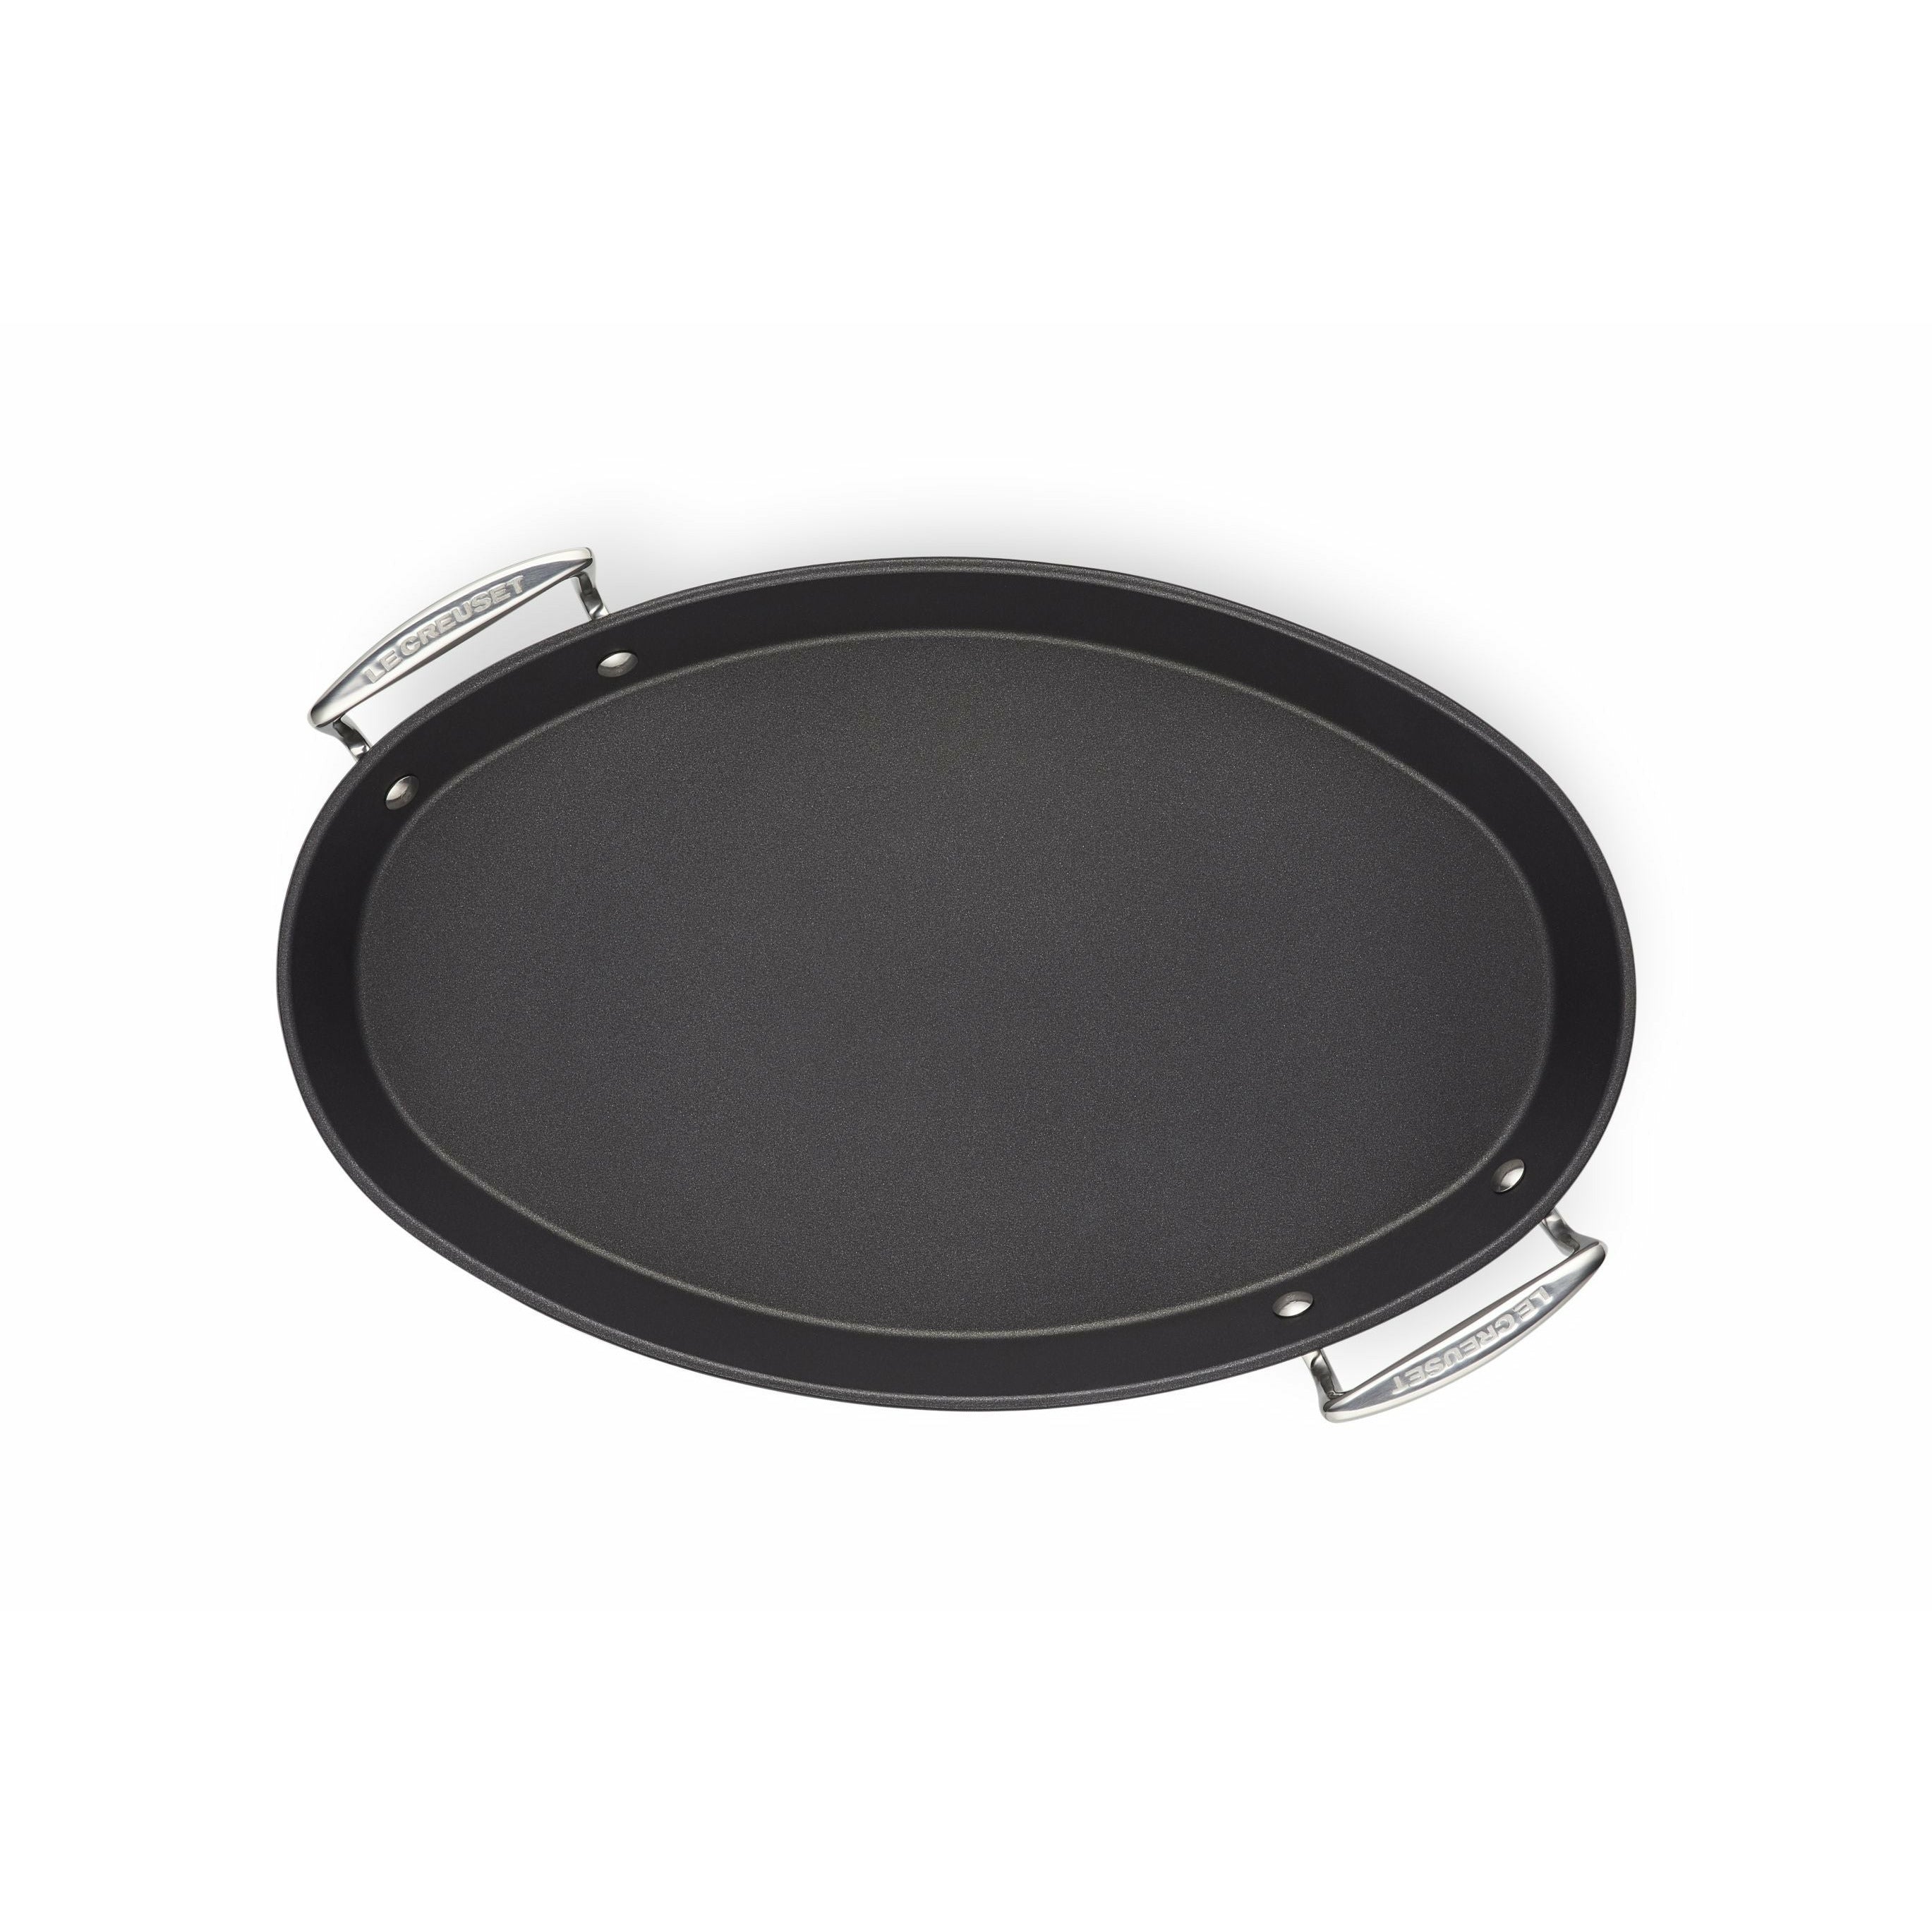 Le Creuset Oval Fishing Pan härdad non-stick, 40 cm